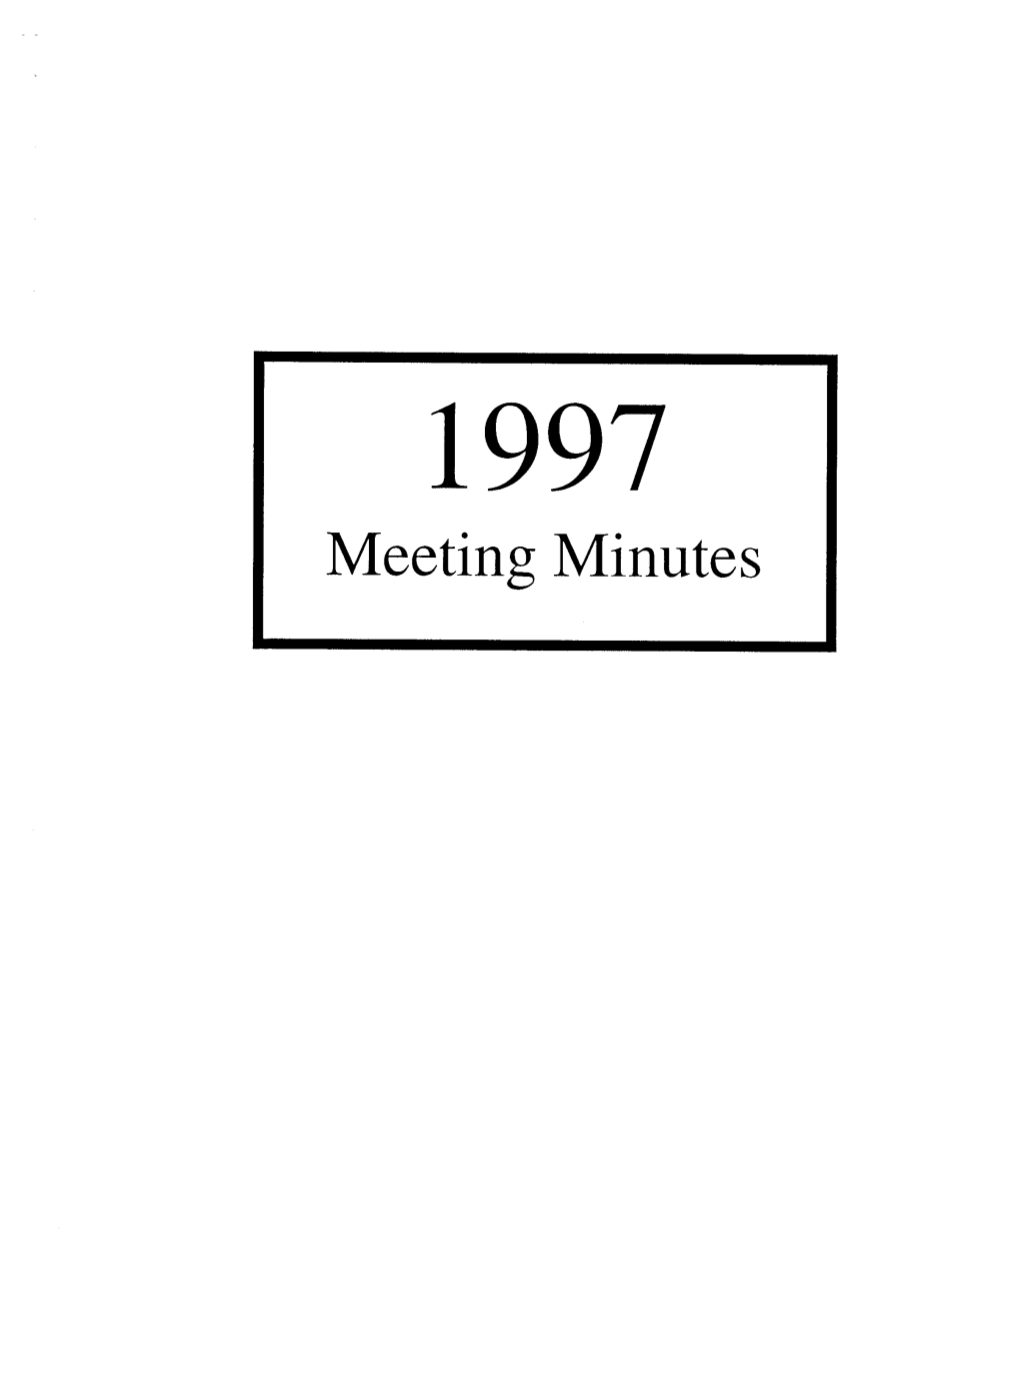 Meeting Minutes Western Committee on Crop Pests 36" Annual Meeting Crowne Plaza Hotel Edmonton, AB